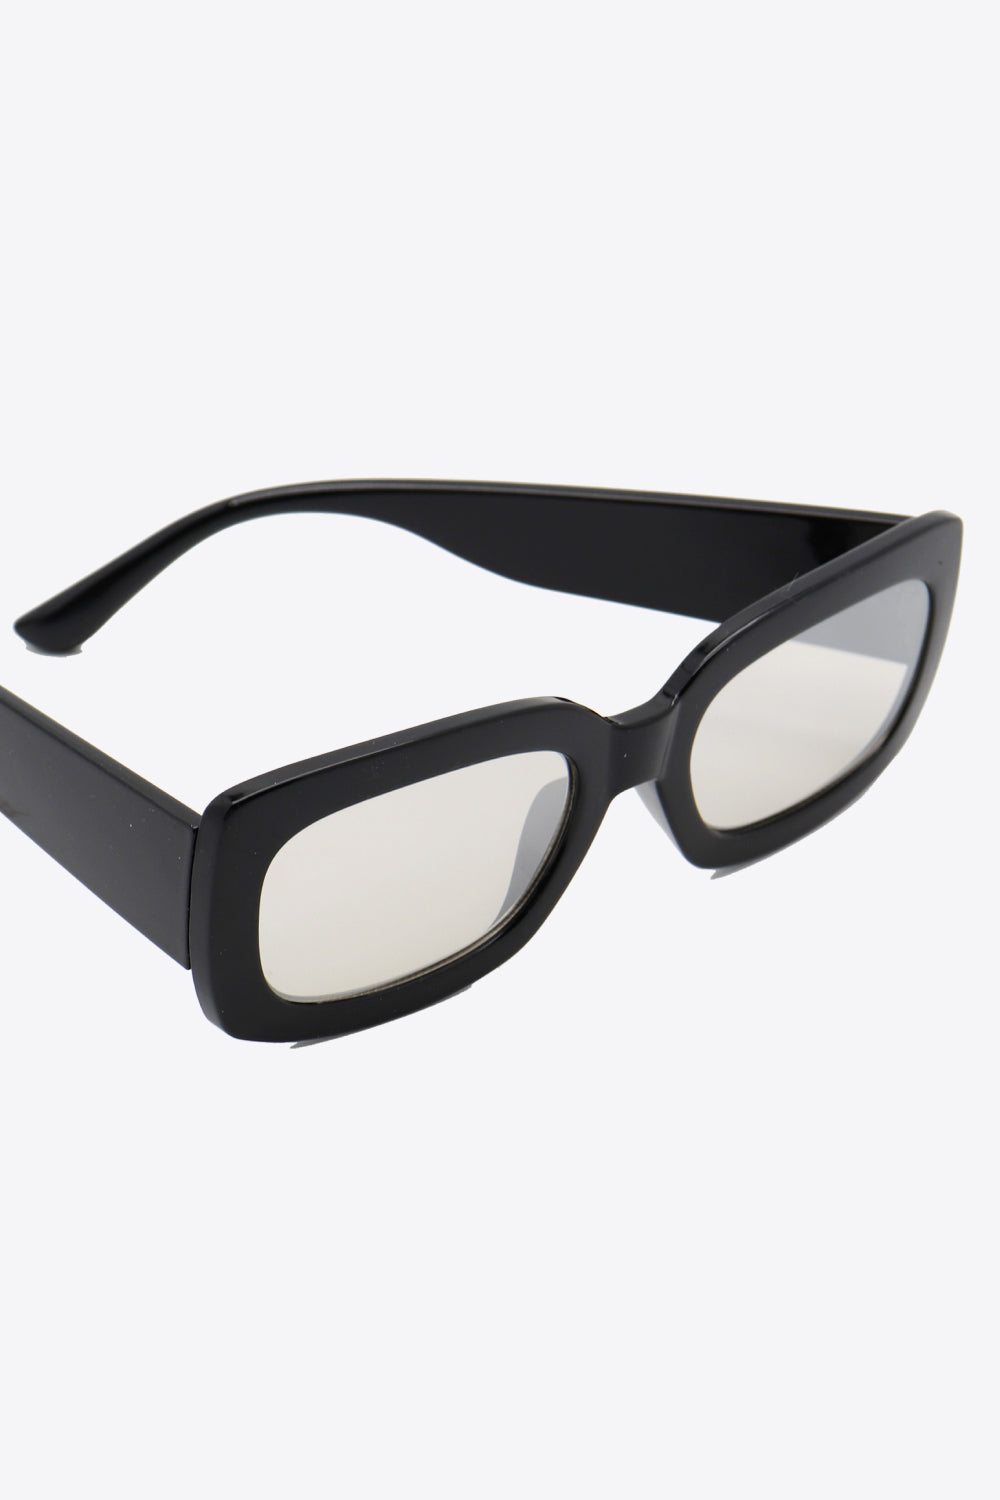 Uylee’s Boutique Polycarbonate Frame Rectangle Sunglasses